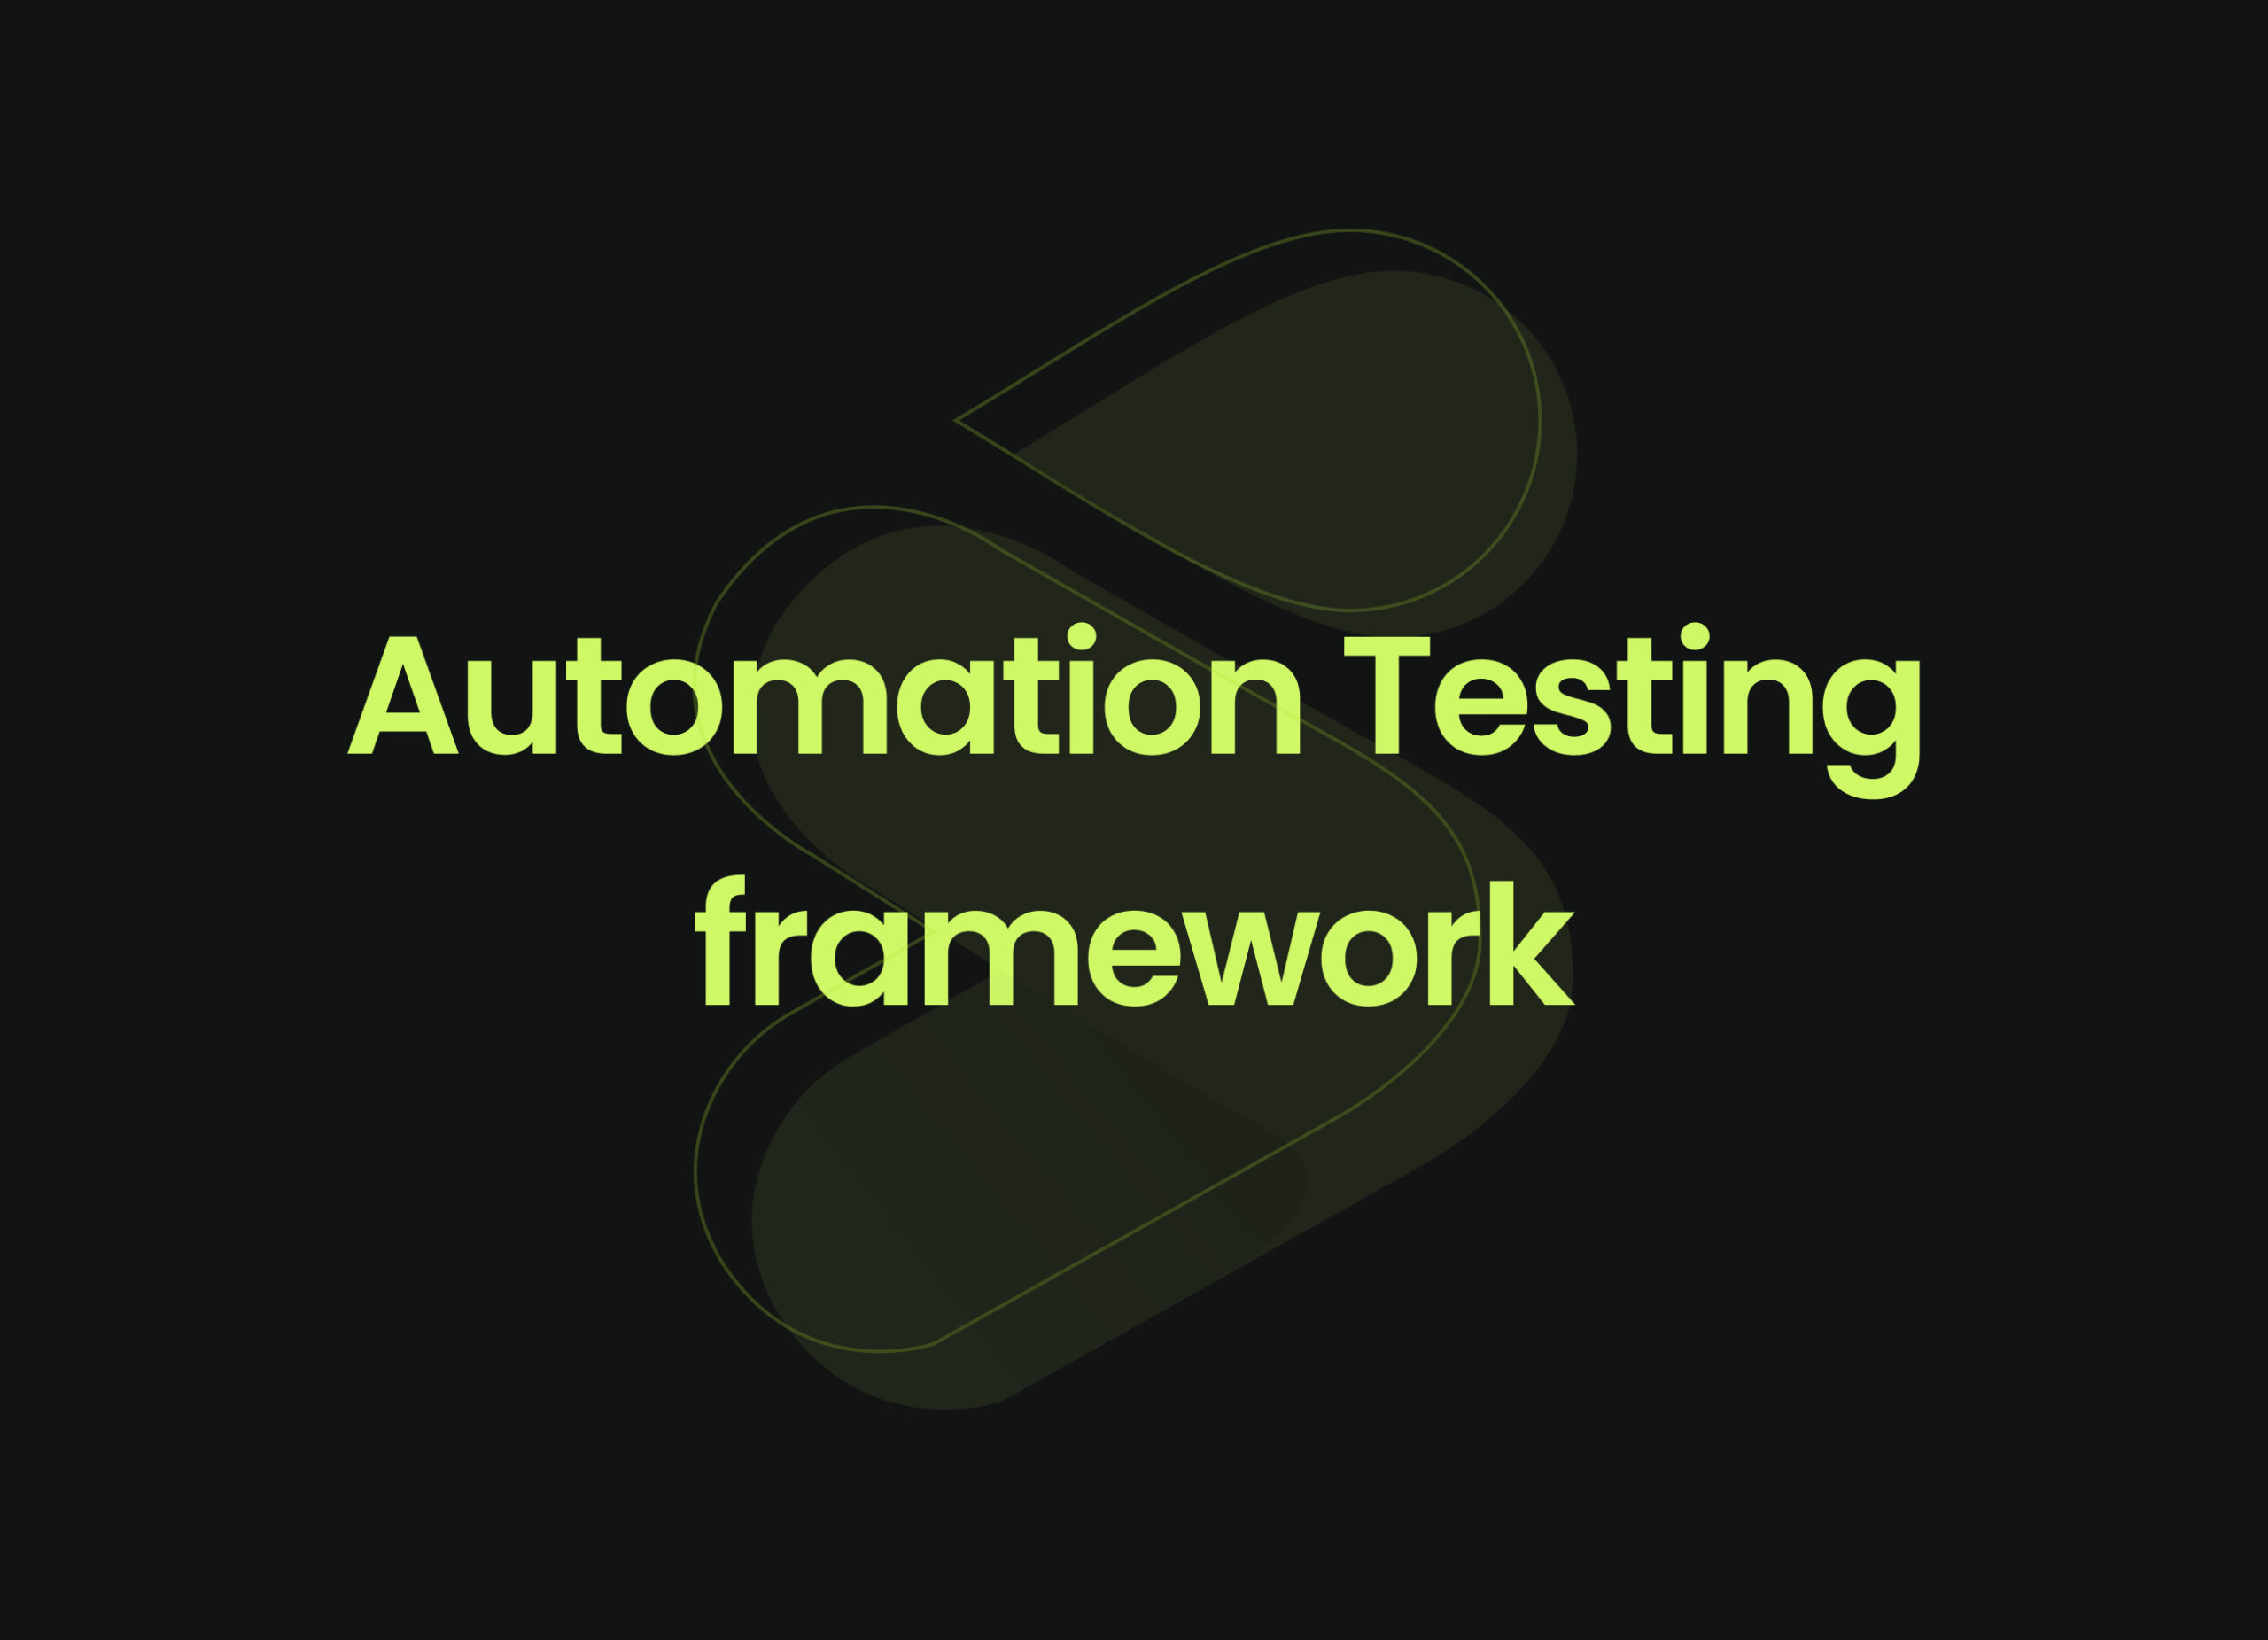 Automation Testing framework